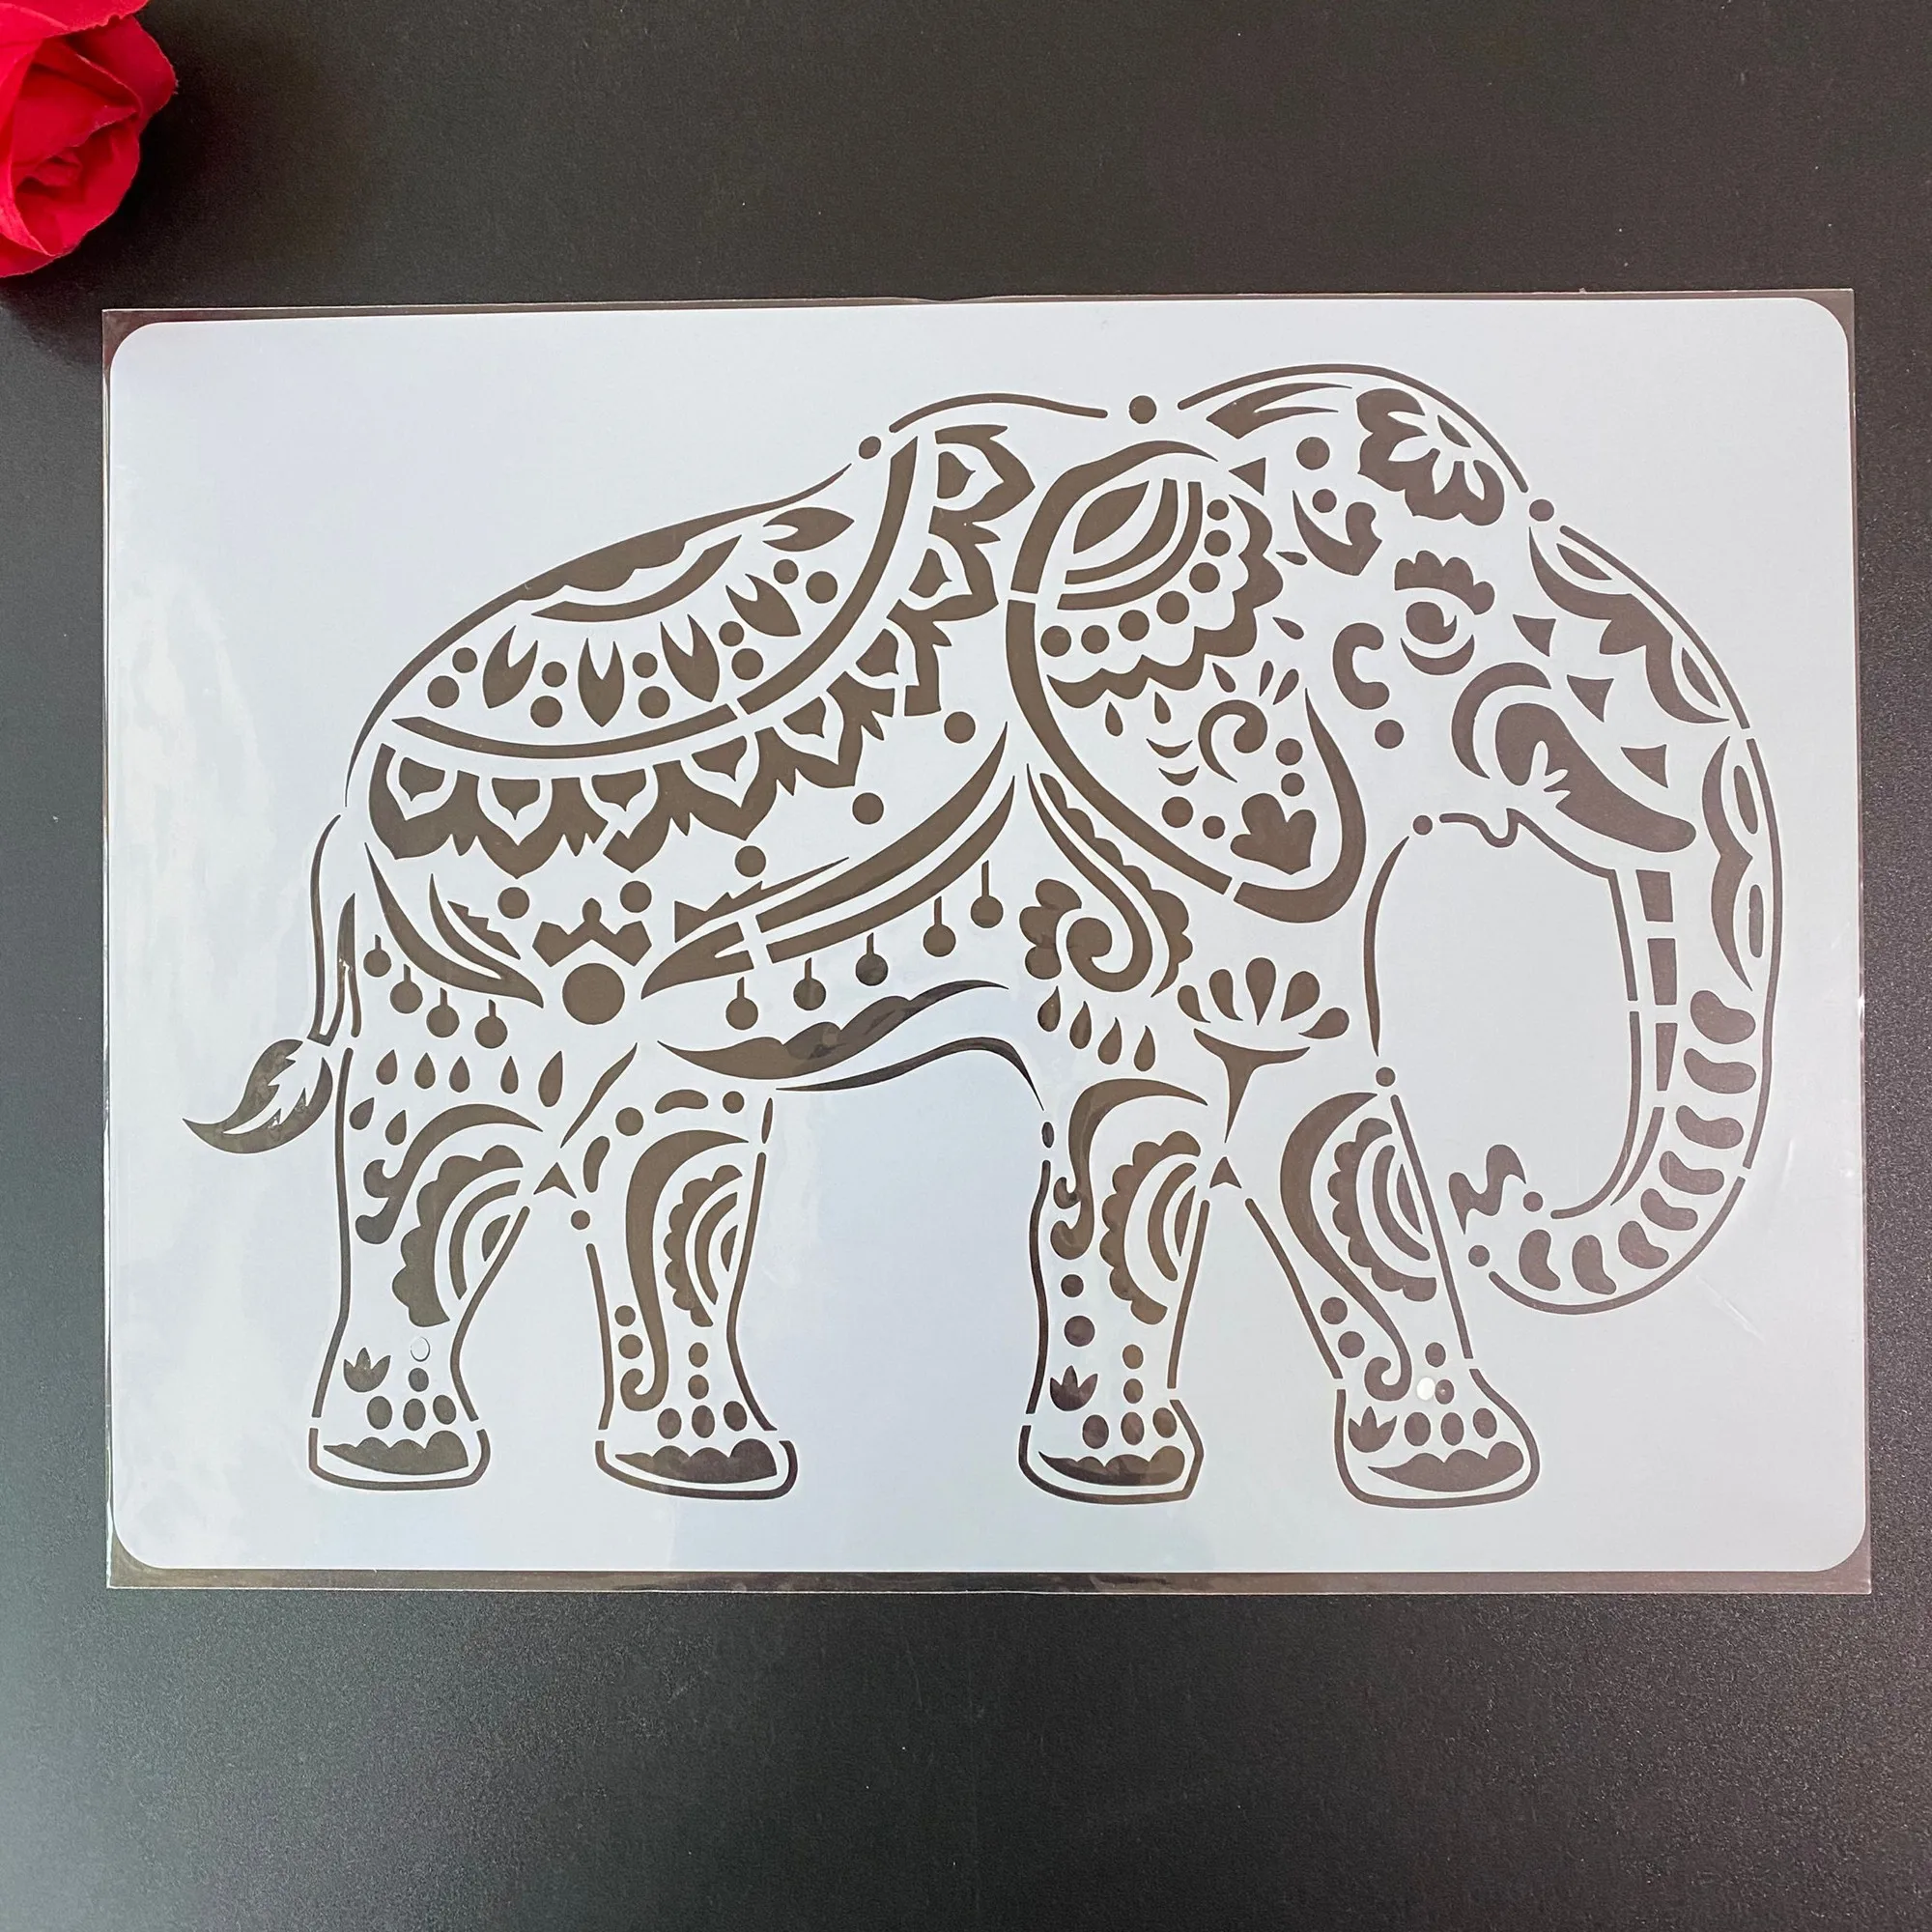 4pcs / set A4 Mandala elephant Stencils Painting Coloring Embossing Scrapbook Album Decorative Template stencil  CN(Origin) images - 6